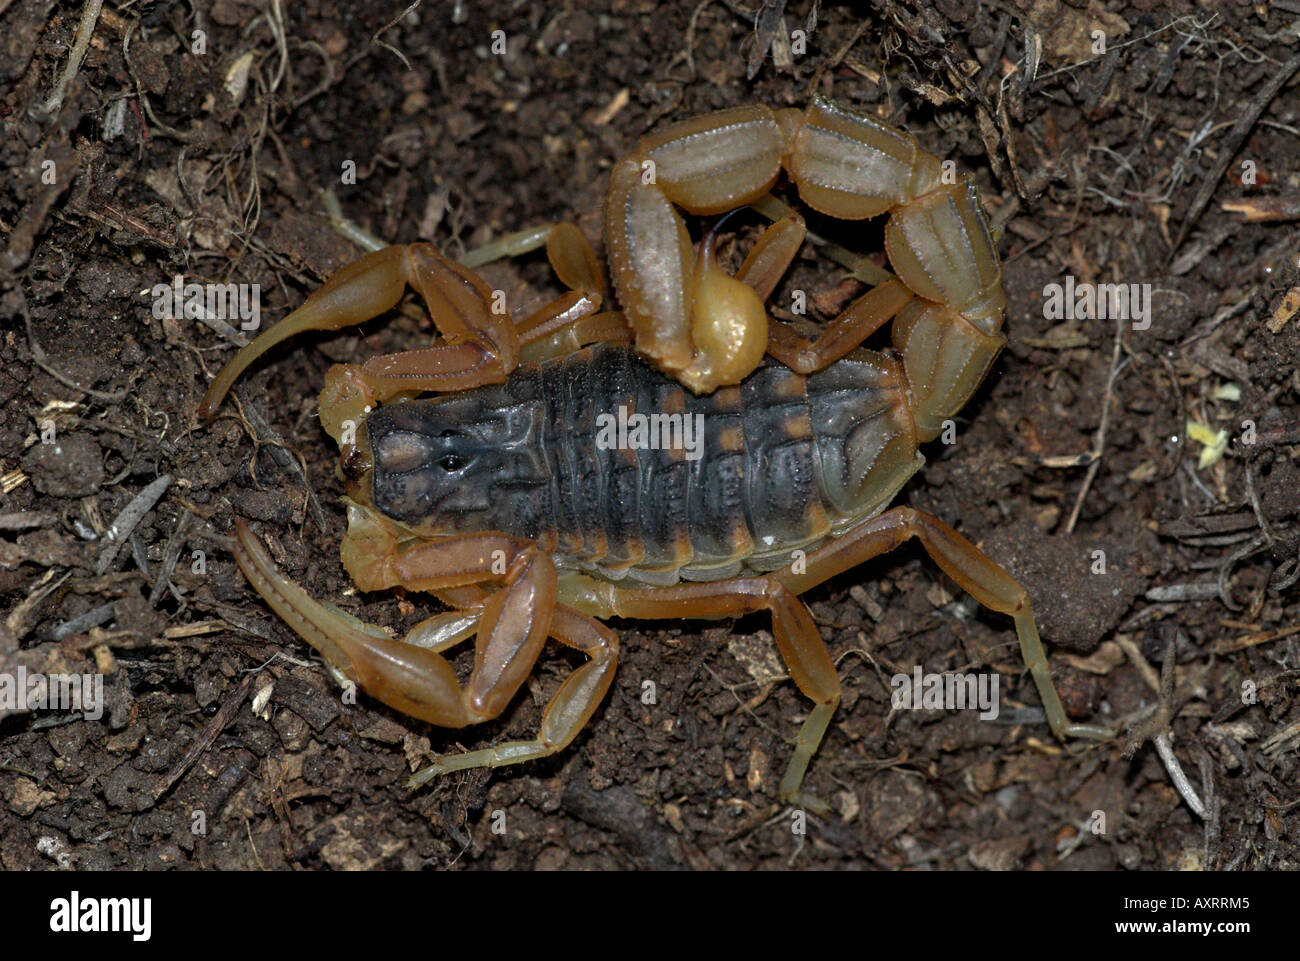 European Scorpion Buthus occitanus on ground Andalusia Stock Photo